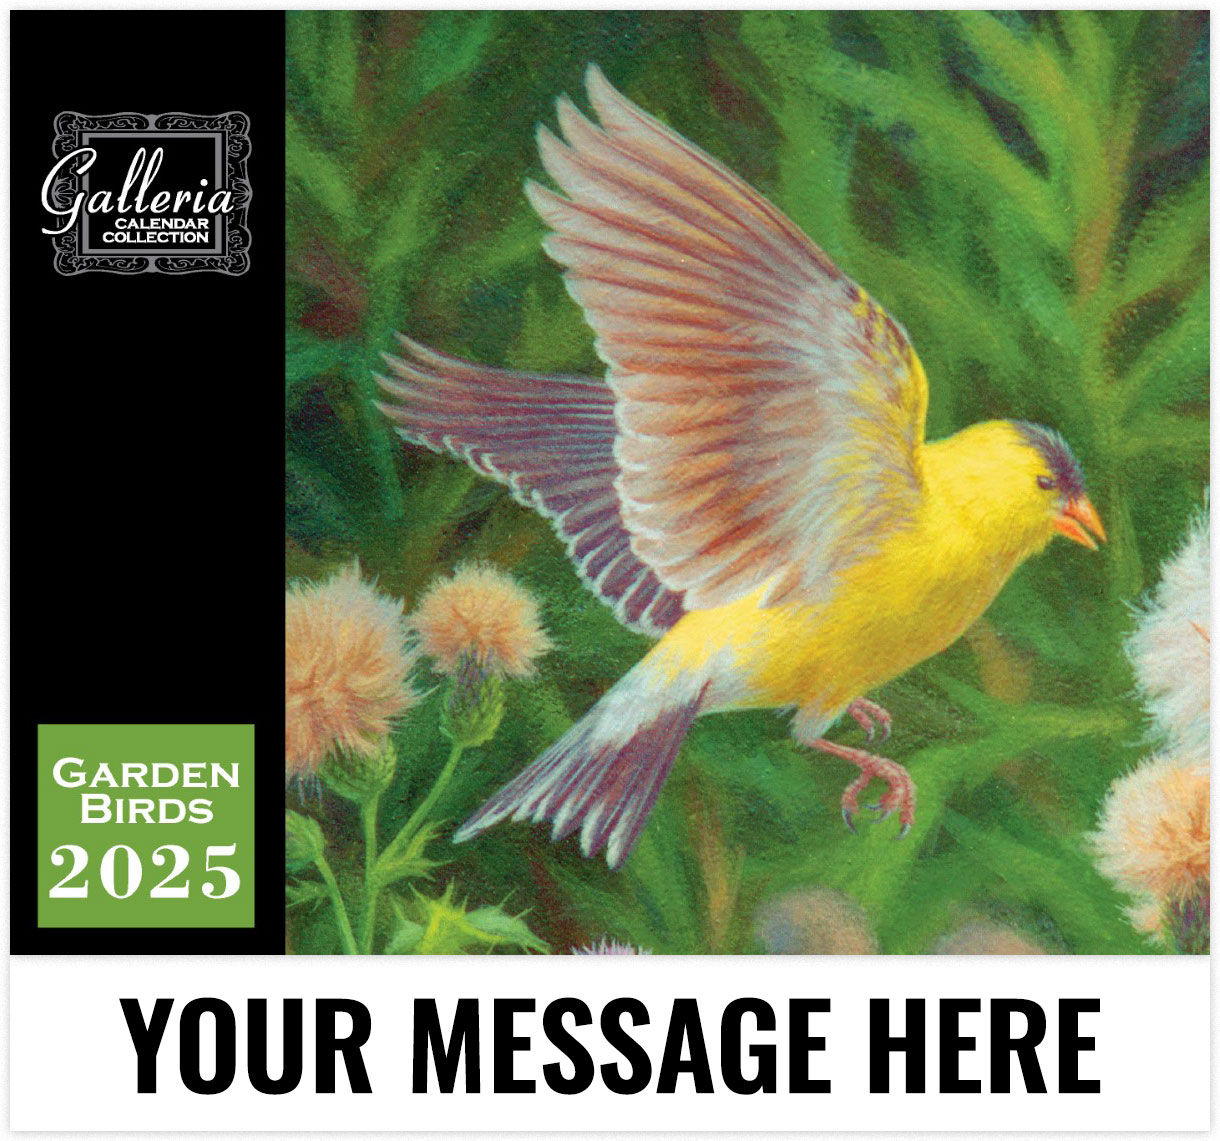 Galleria Garden Birds - 2025